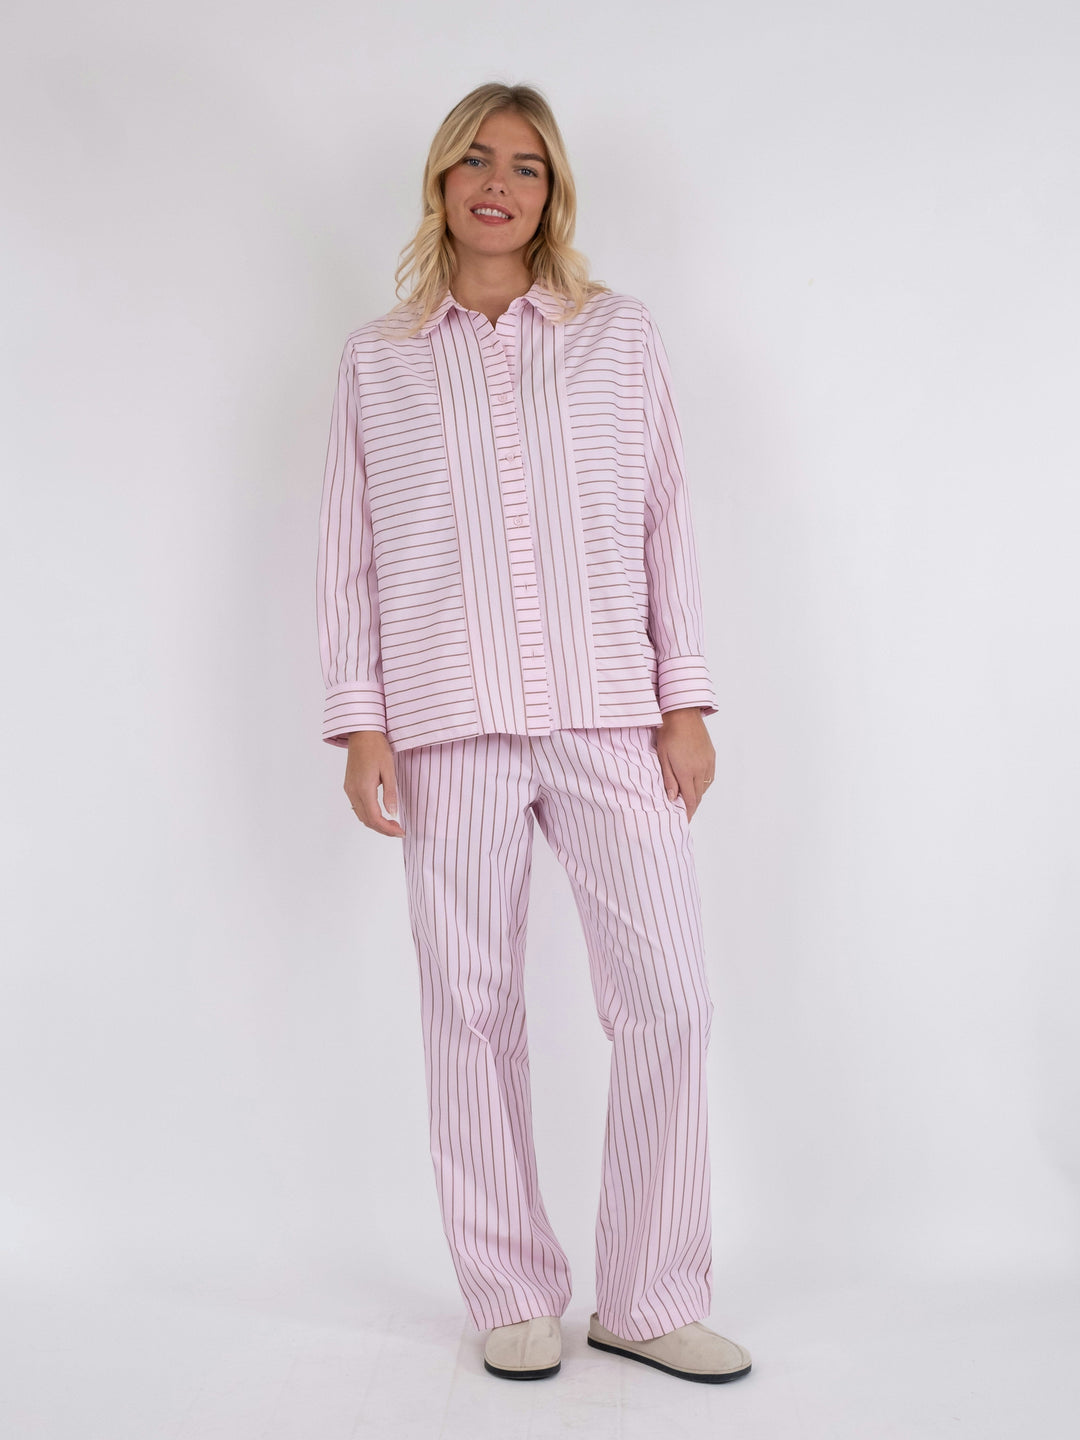 Neo Noir - Gili Multi Stripe Shirt - Light Pink